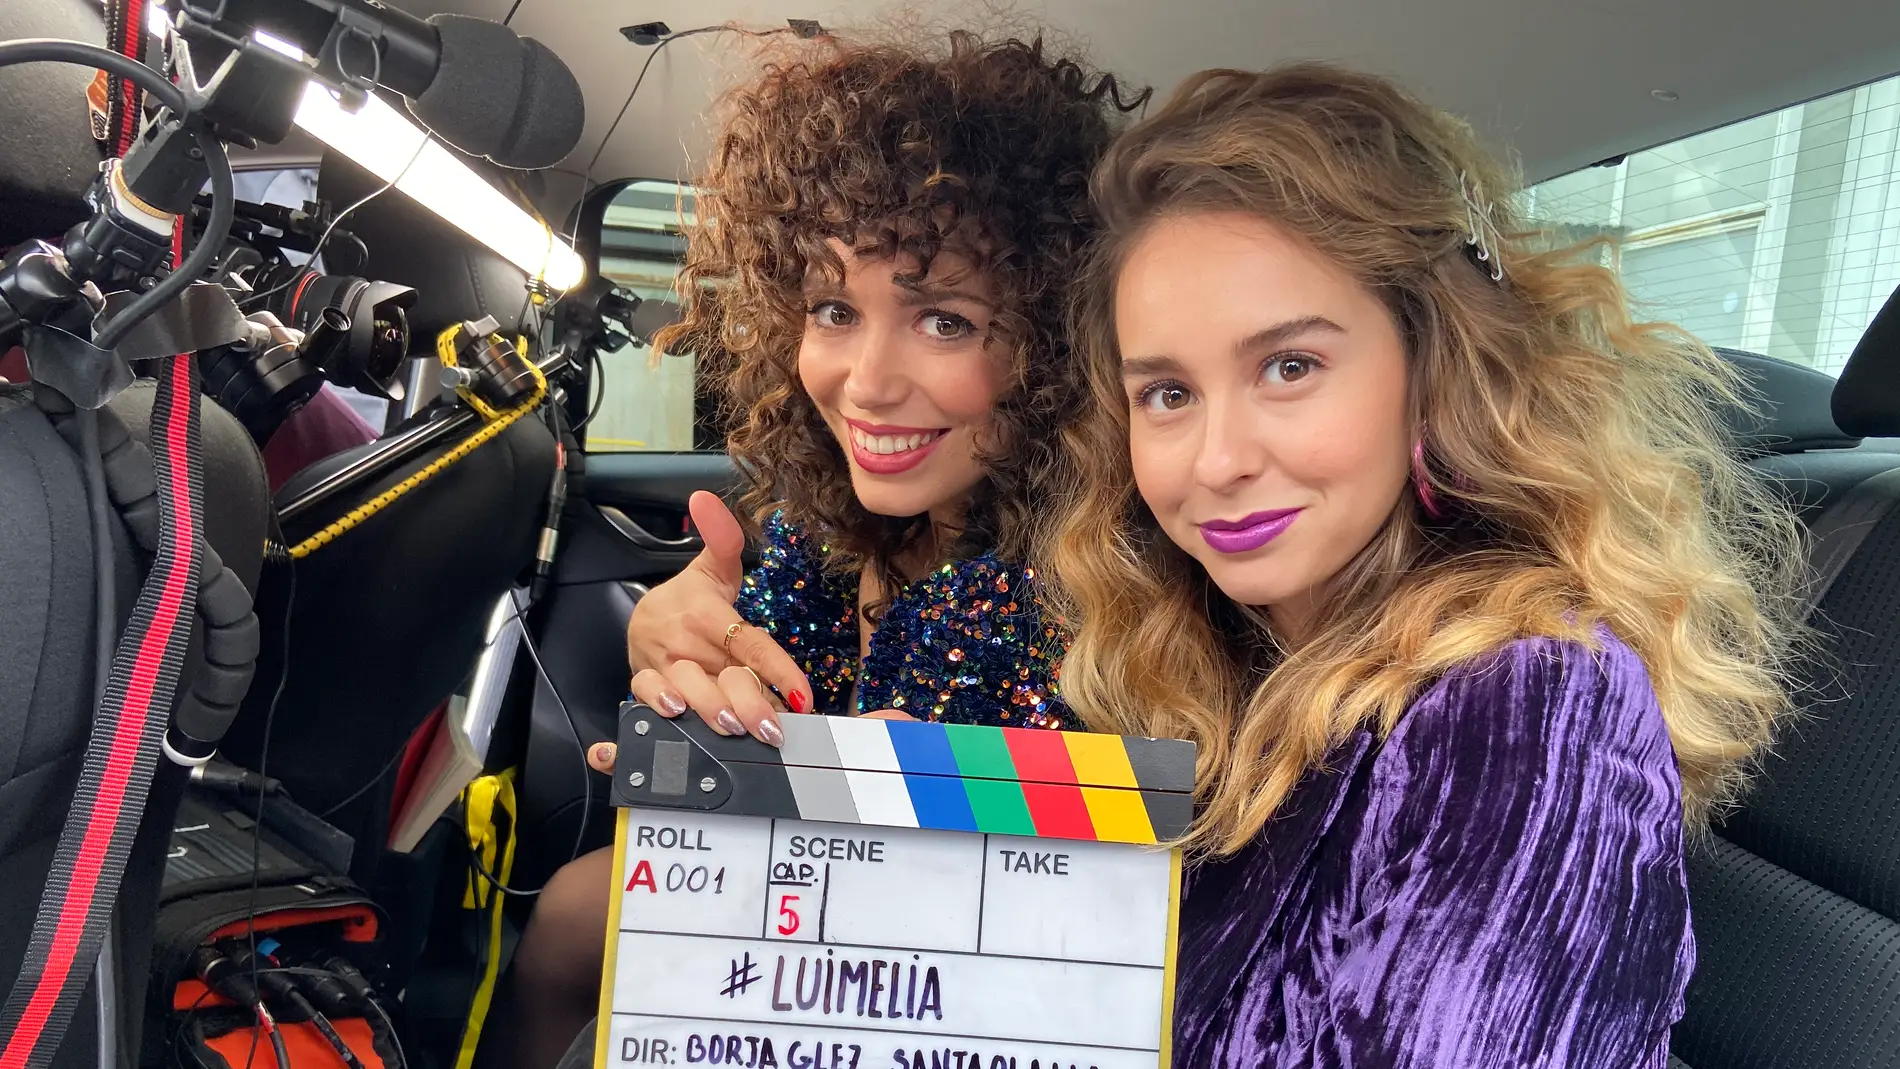  Paula Usero y Carol Rovira durante el rodaje de '#Luimelia'